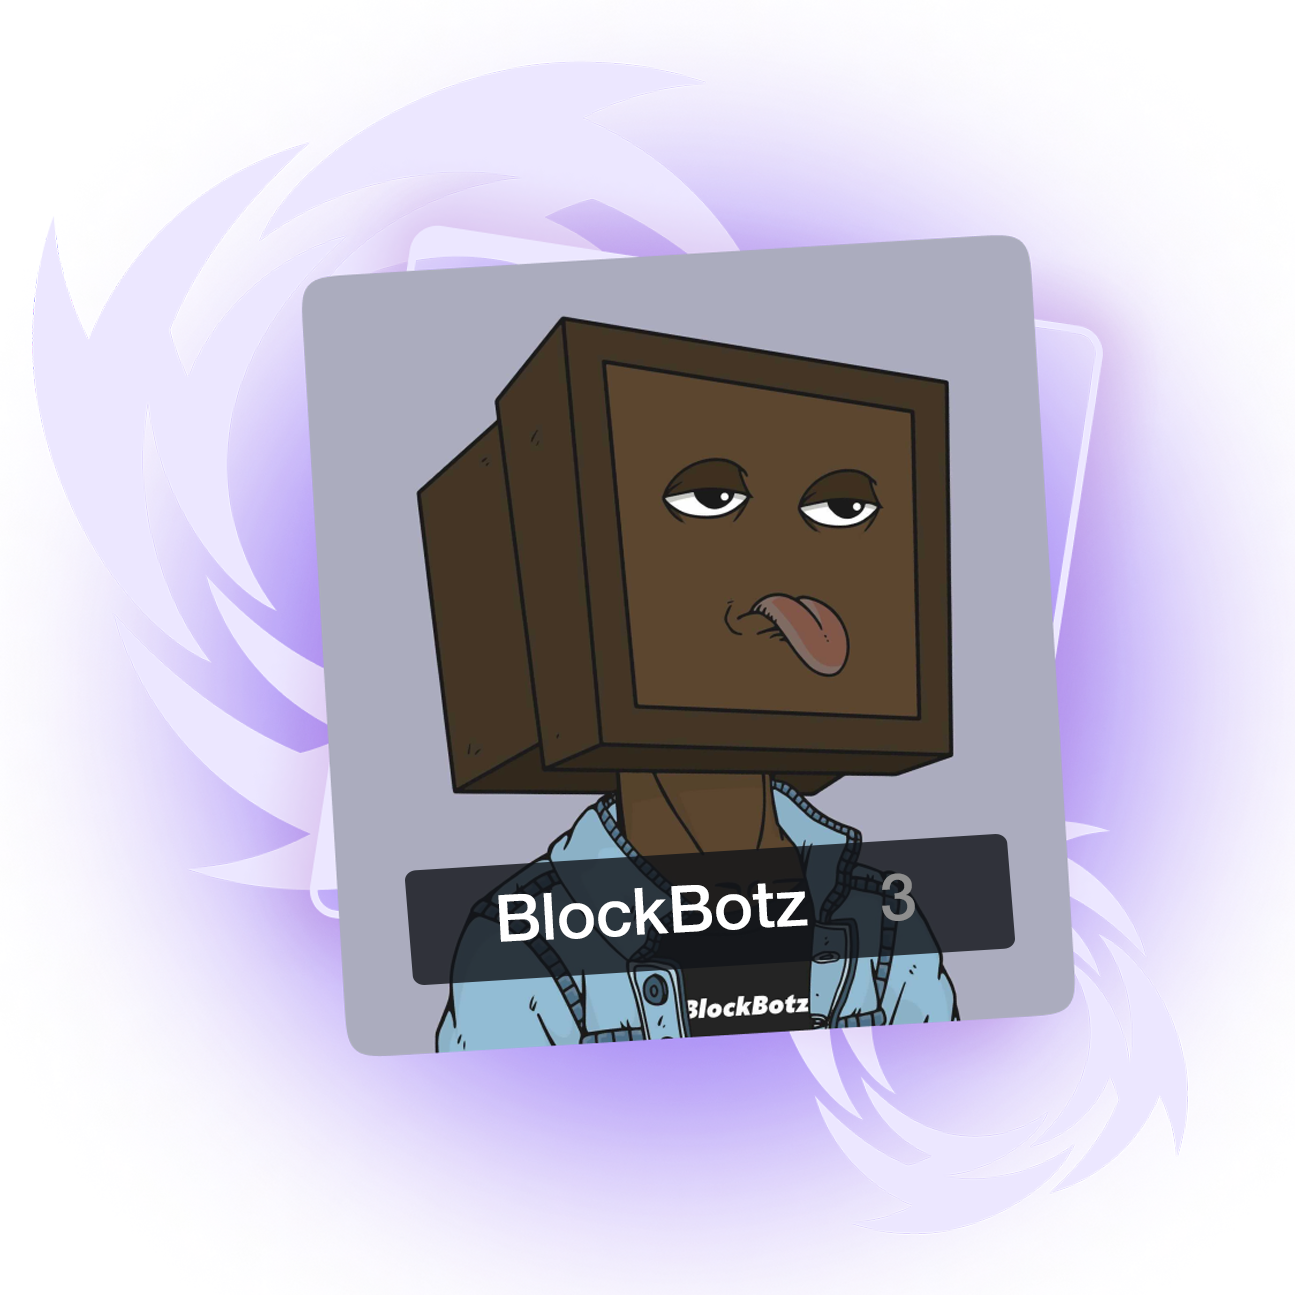 Introducing BlockBotz NFT Collection